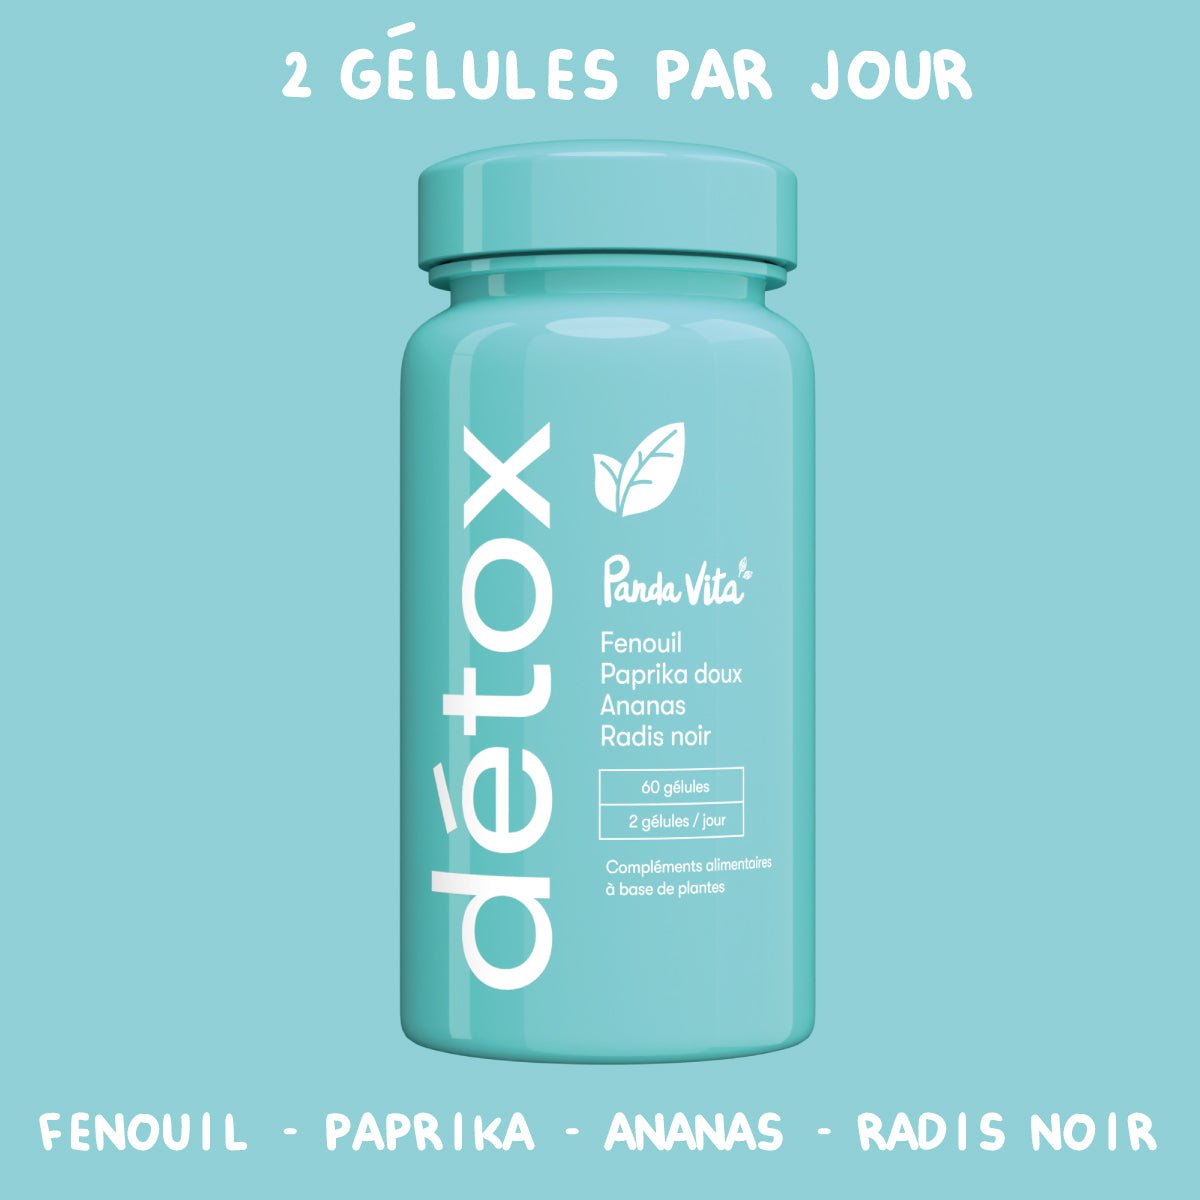 Panda Tea Morning Boost Détox Parfum Pamplemousse - Gingembre 28